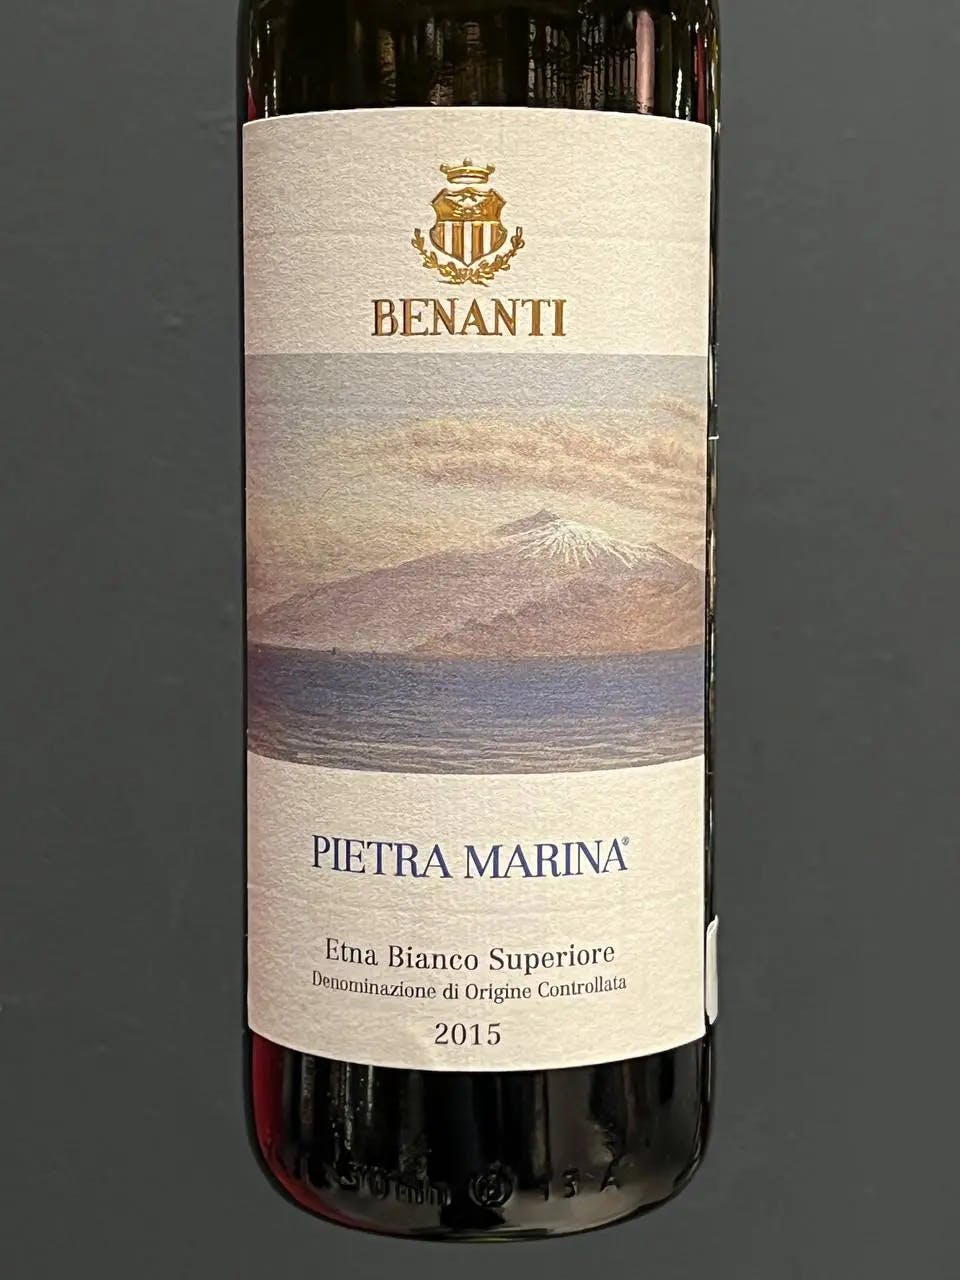 Benanti Etna Bianco Superiore Pietra Marina 2015